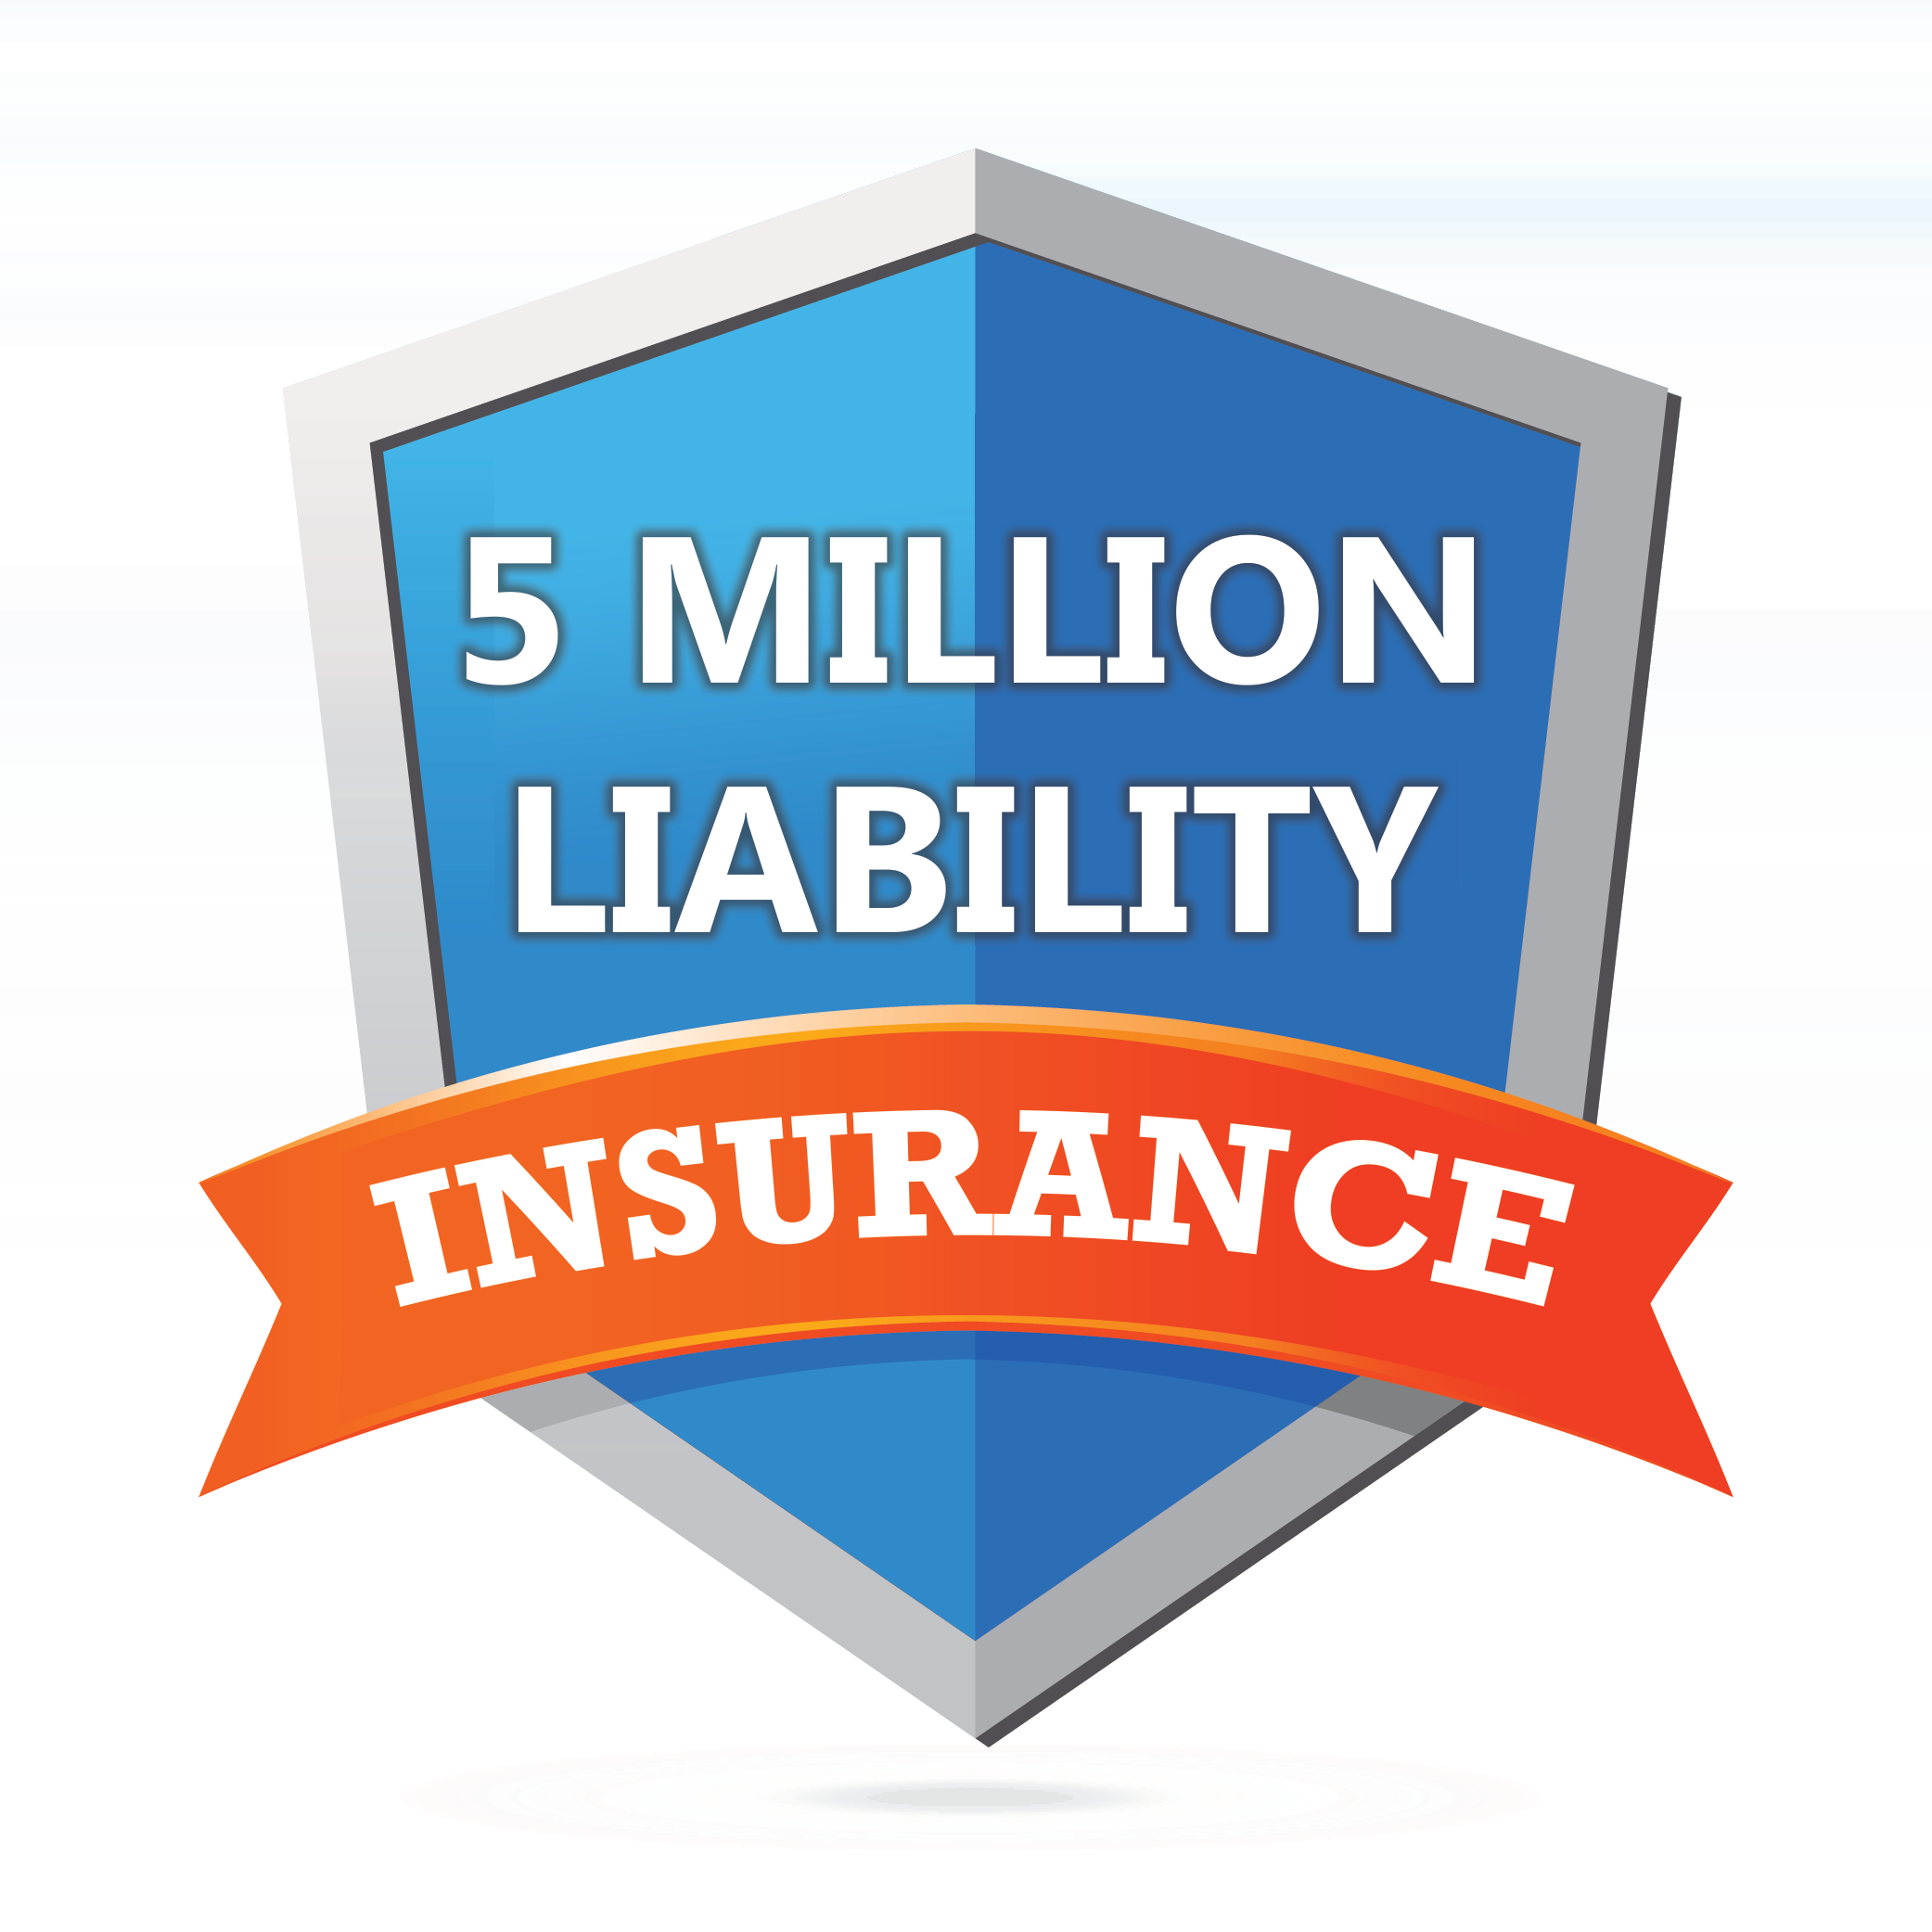 5 Million Liability Insurance